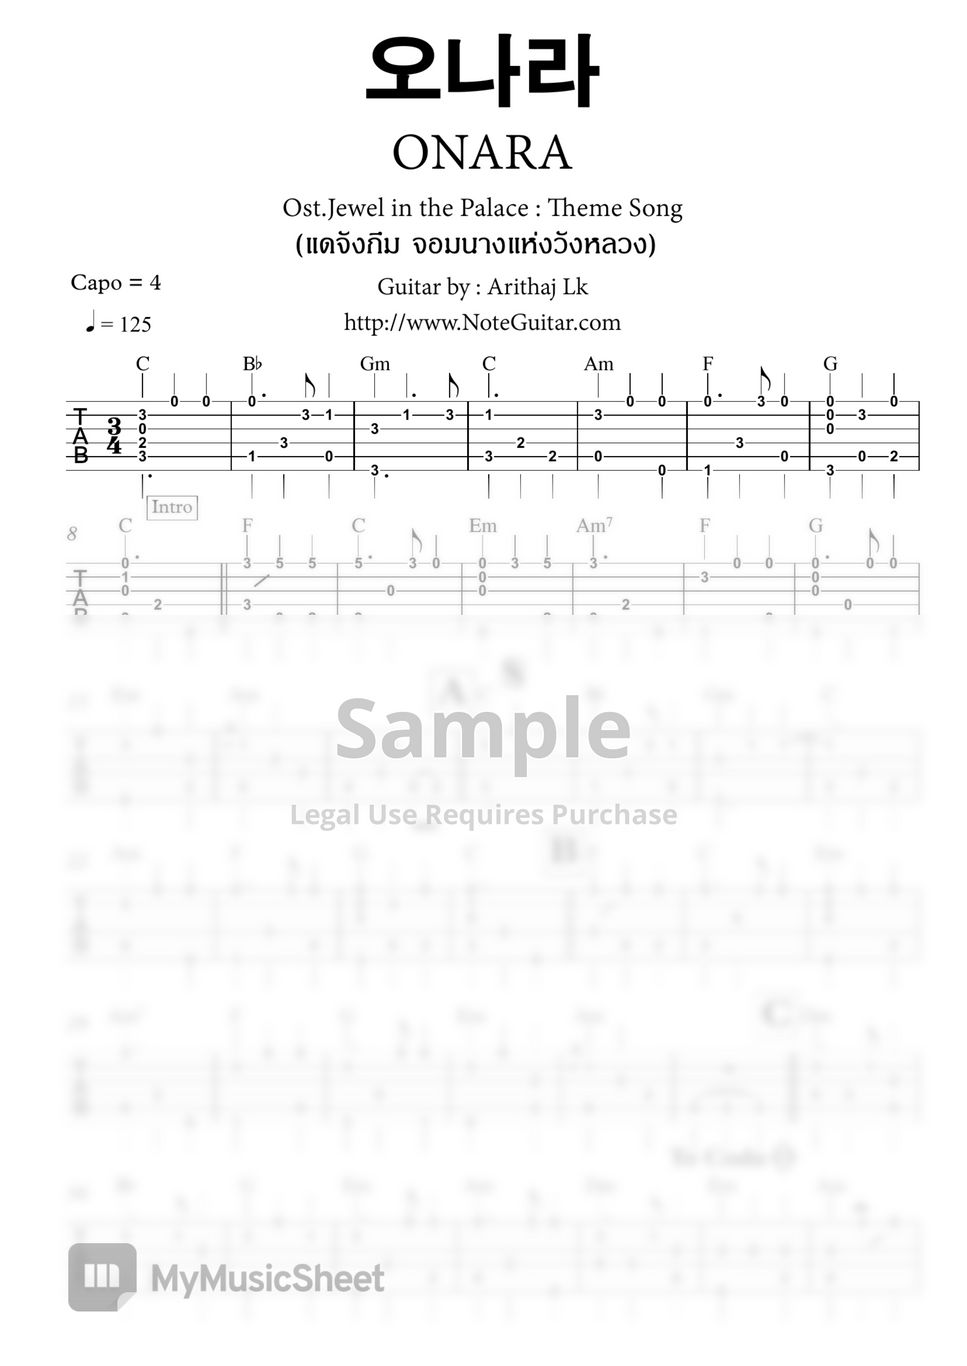 Ost.Jewel in the Palace - 오나라 ONARA Theme Song (Ost.Jewel in the Palace) - Fingerstyle Guitar by Arithaj Lk